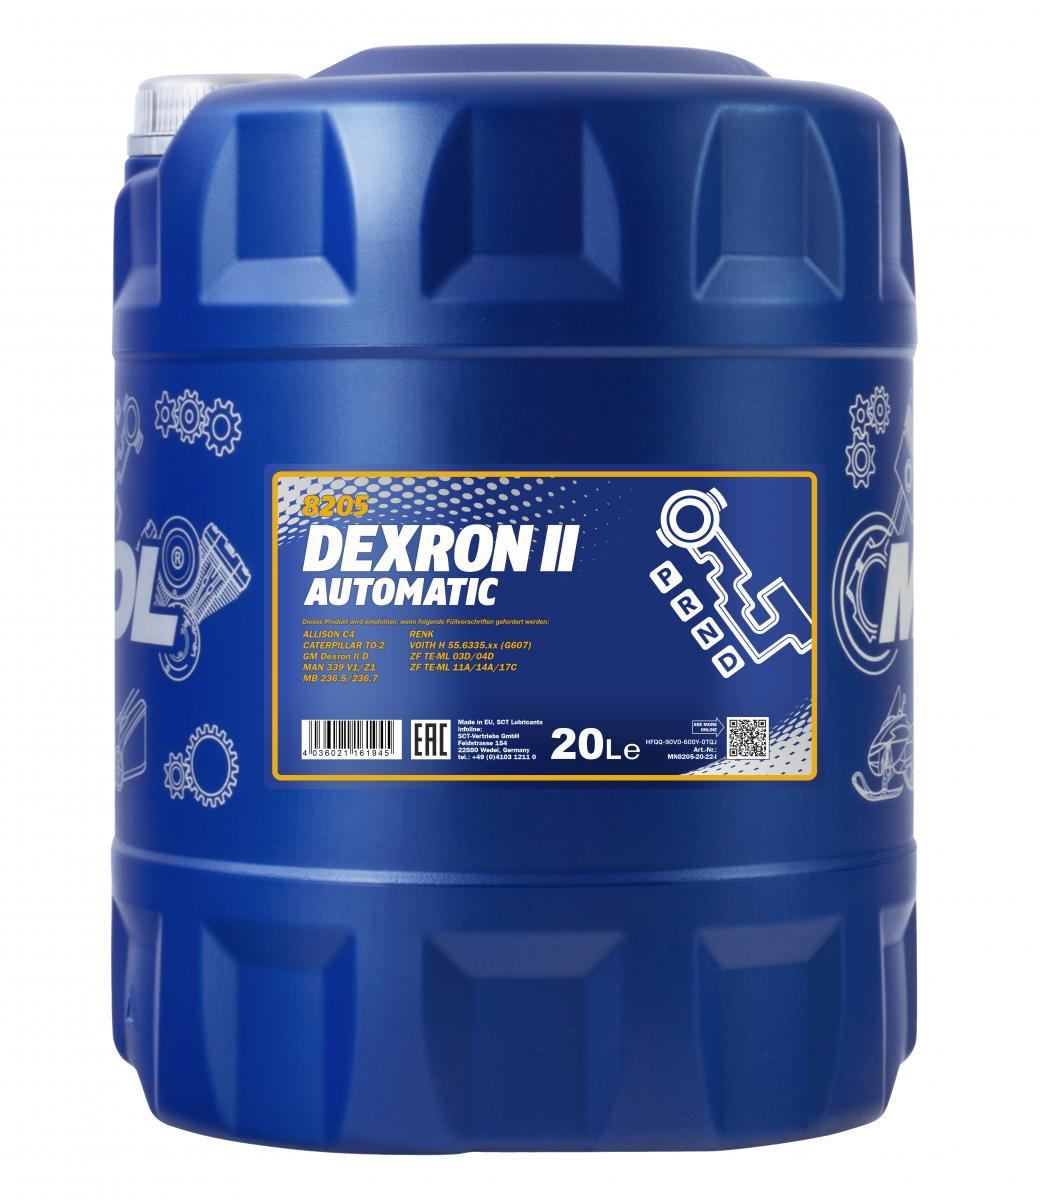 60 Liter MANNOL Dexron II Automatic Getriebeöl Automatikgetriebe Öl + Ablasshahn